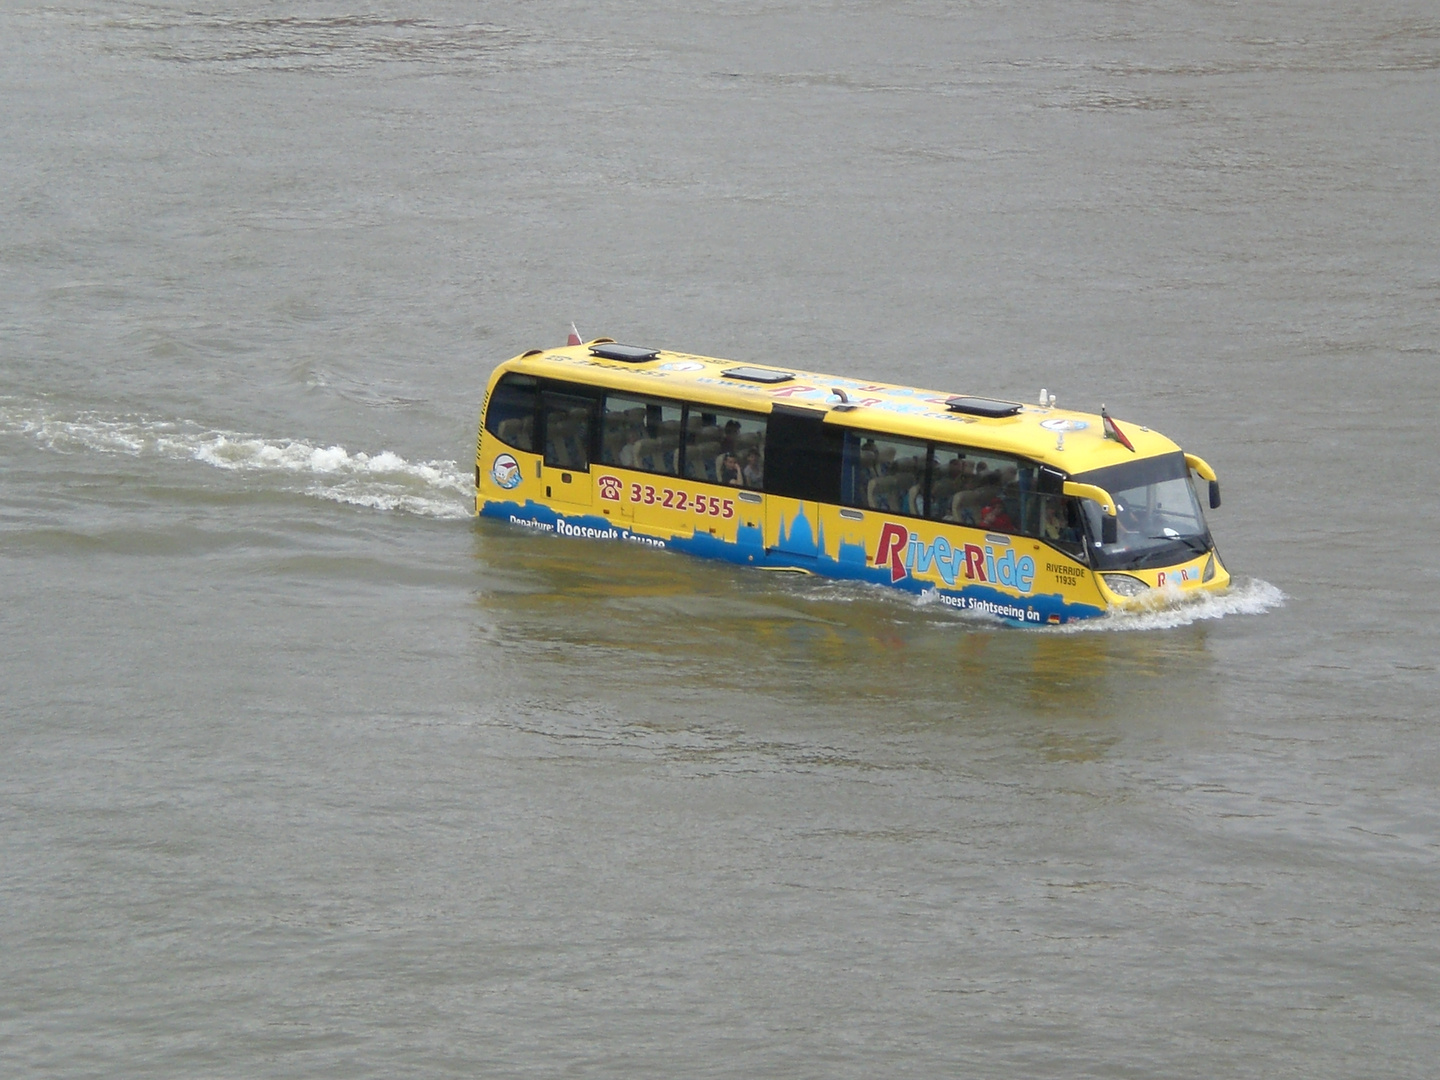 Donautour per Bus (River Ride Floating Bus Budapest)